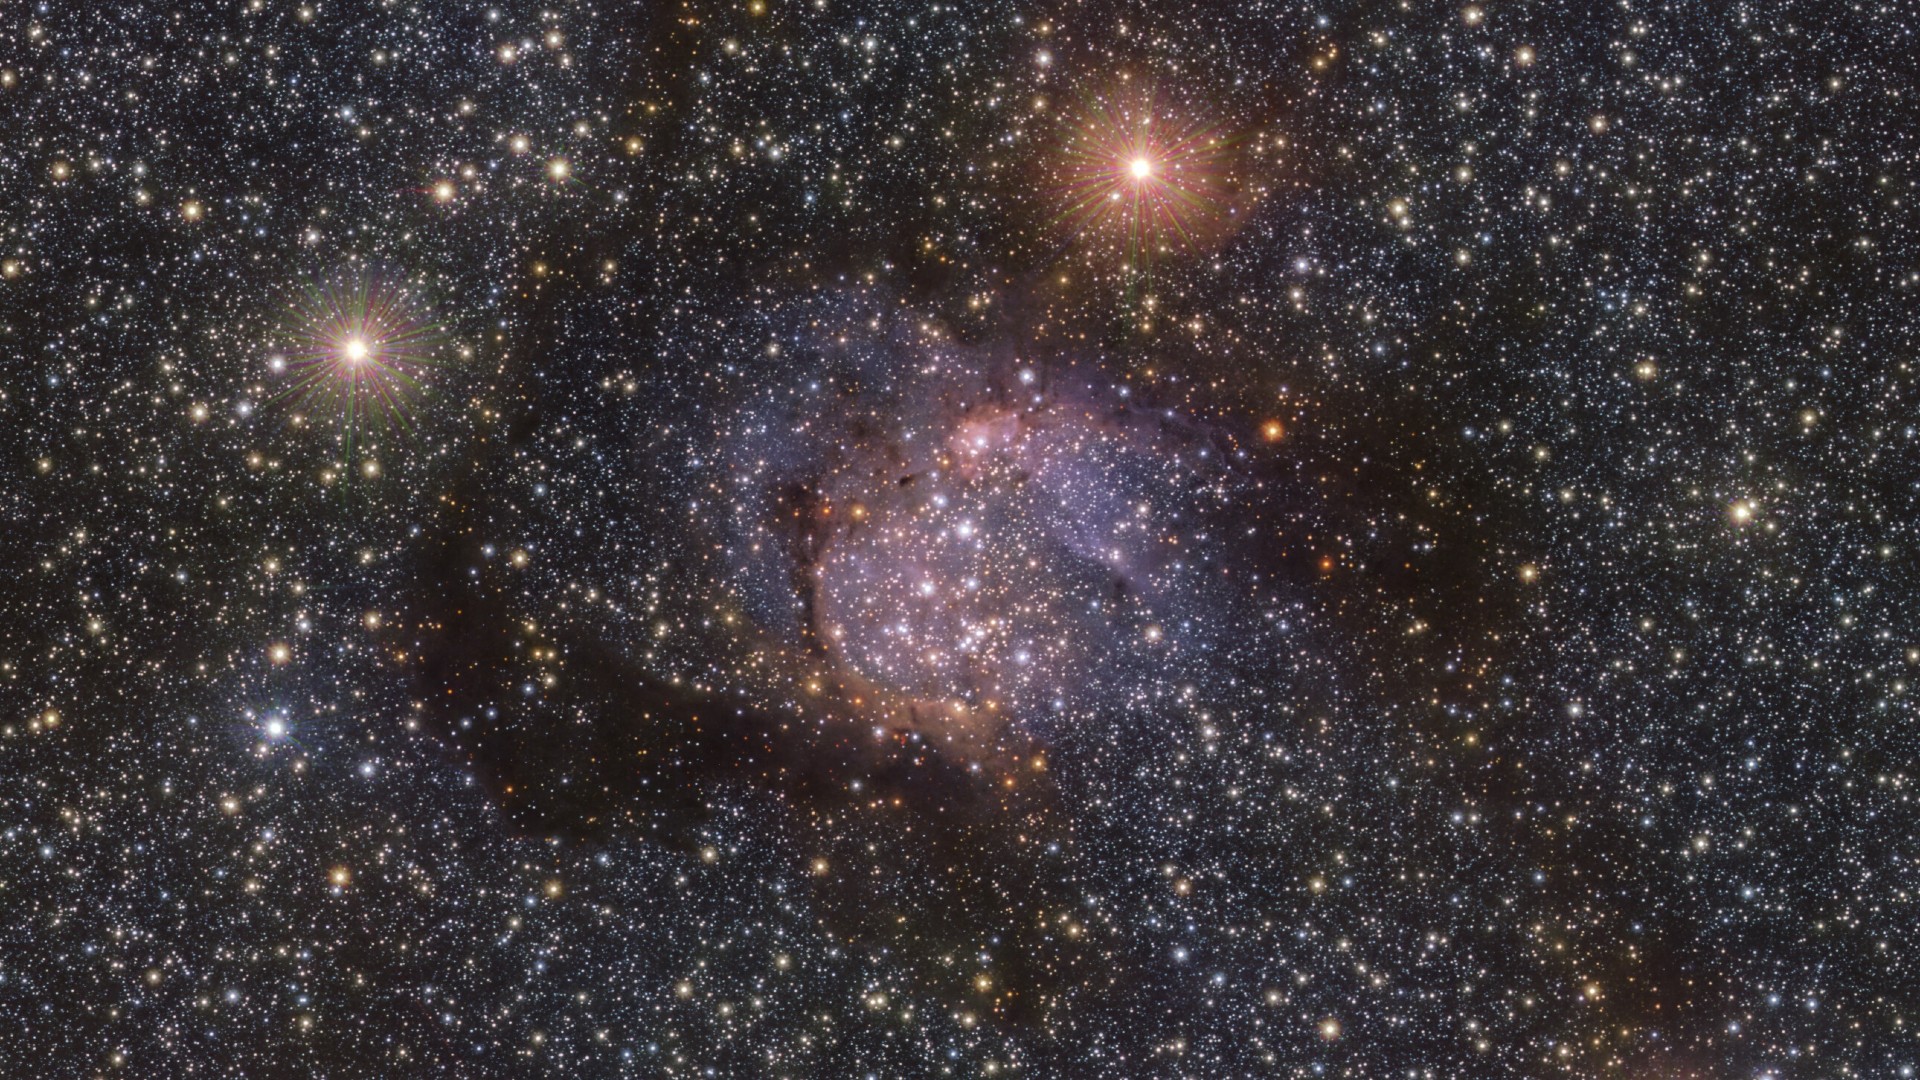 Cosmic serpent slithers through stellar nursery in stunning new image